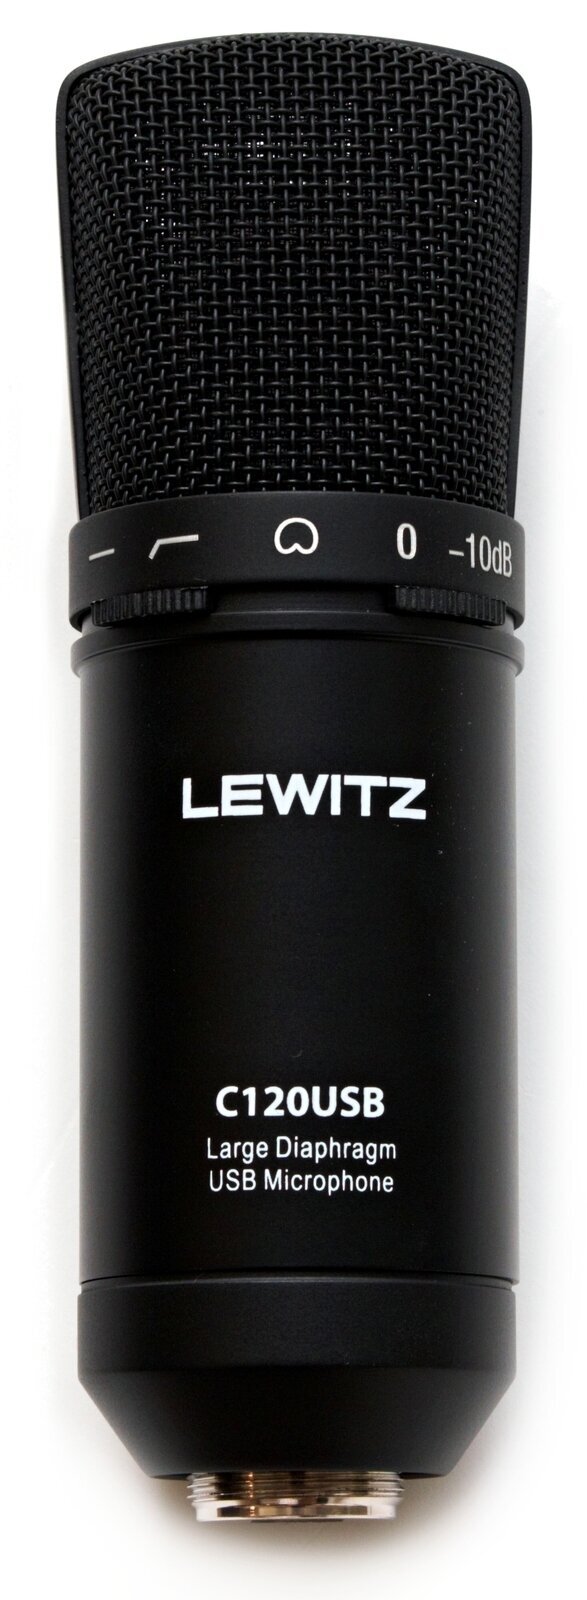 Microphone USB Lewitz C120USB